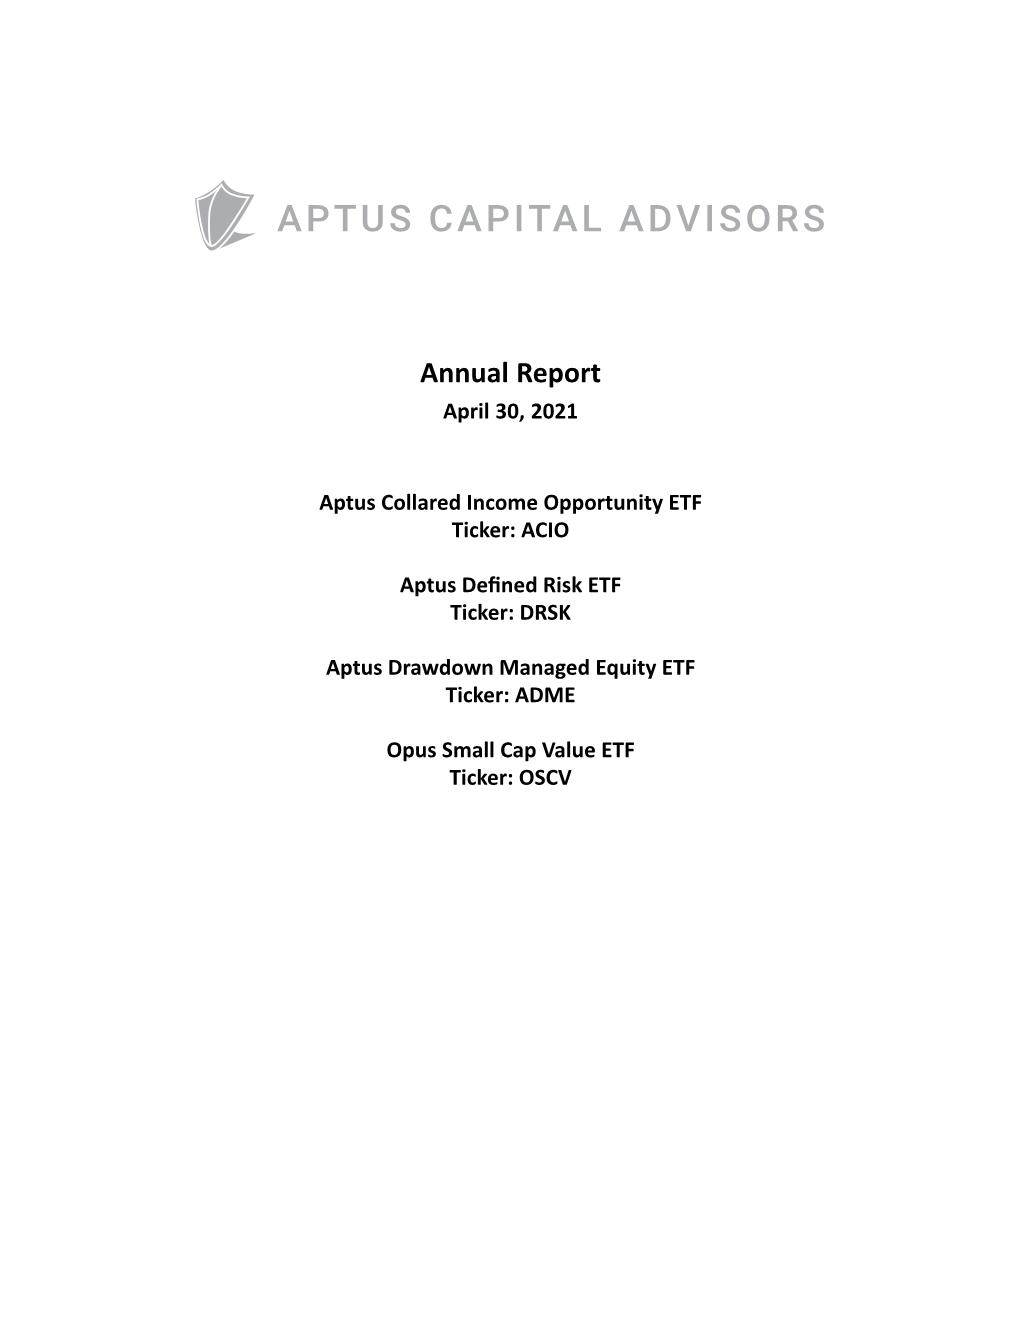 Annual Report April 30, 2021